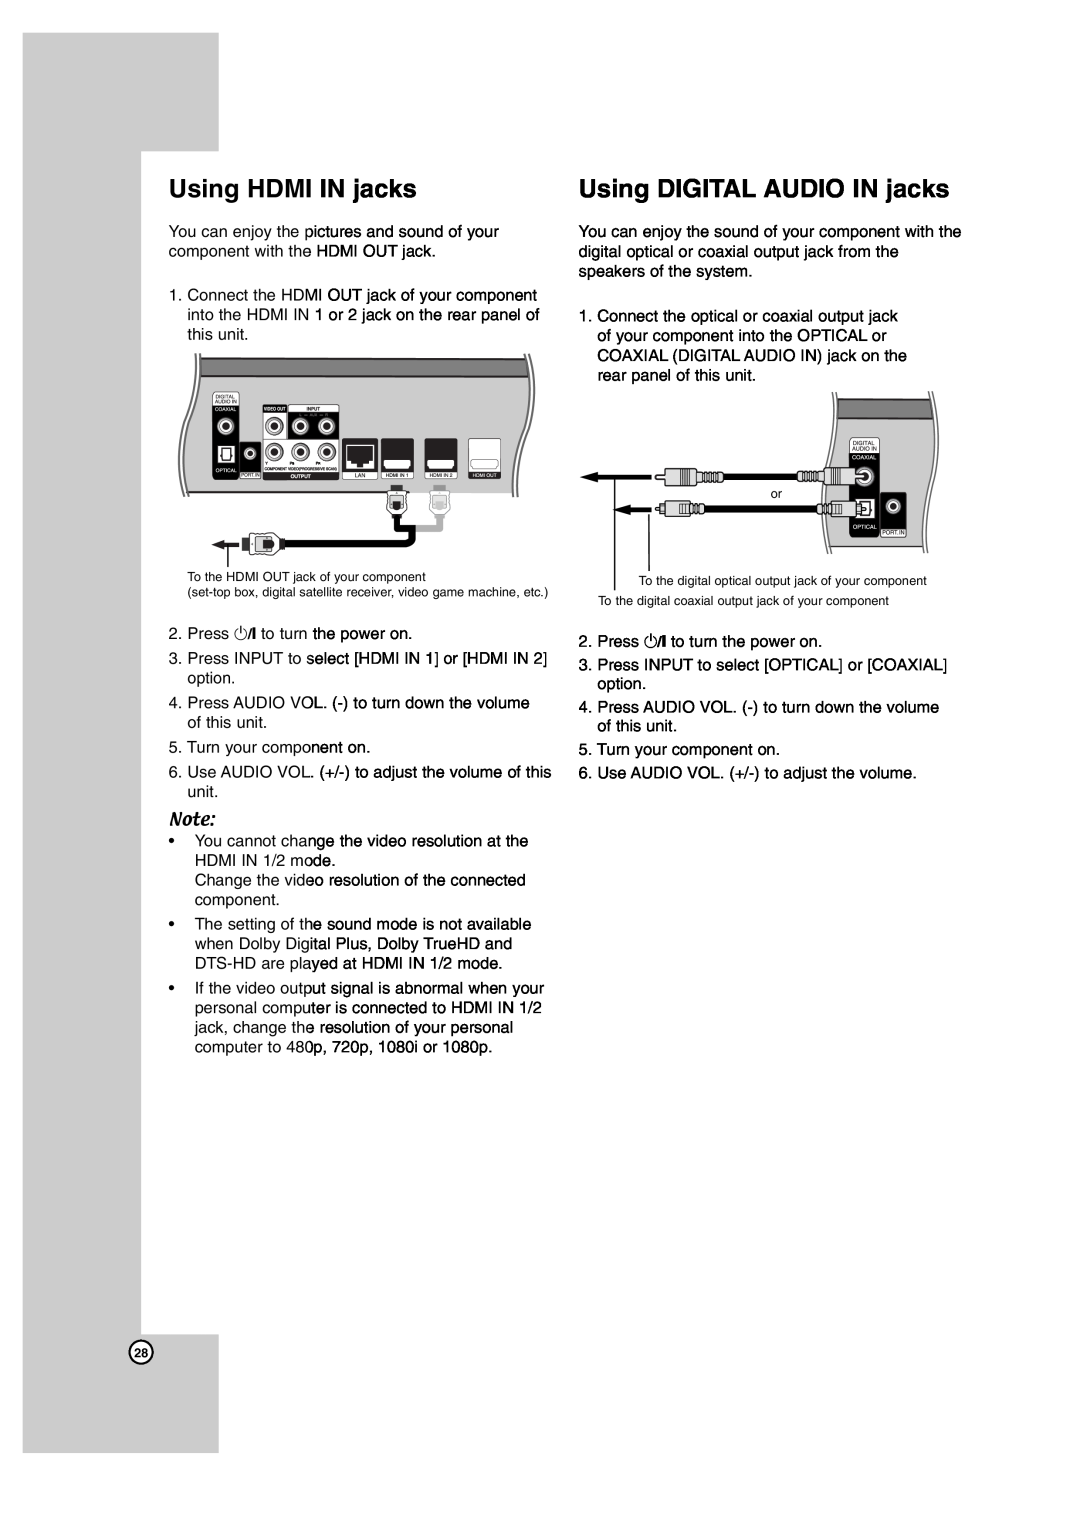 JVC SP-THBD50C, LVT2099-029A, SP-THBD50W, SP-THBD50F, TH-BD50, XV-THBD50 Using HDMI IN jacks, Using DIGITAL AUDIO IN jacks 